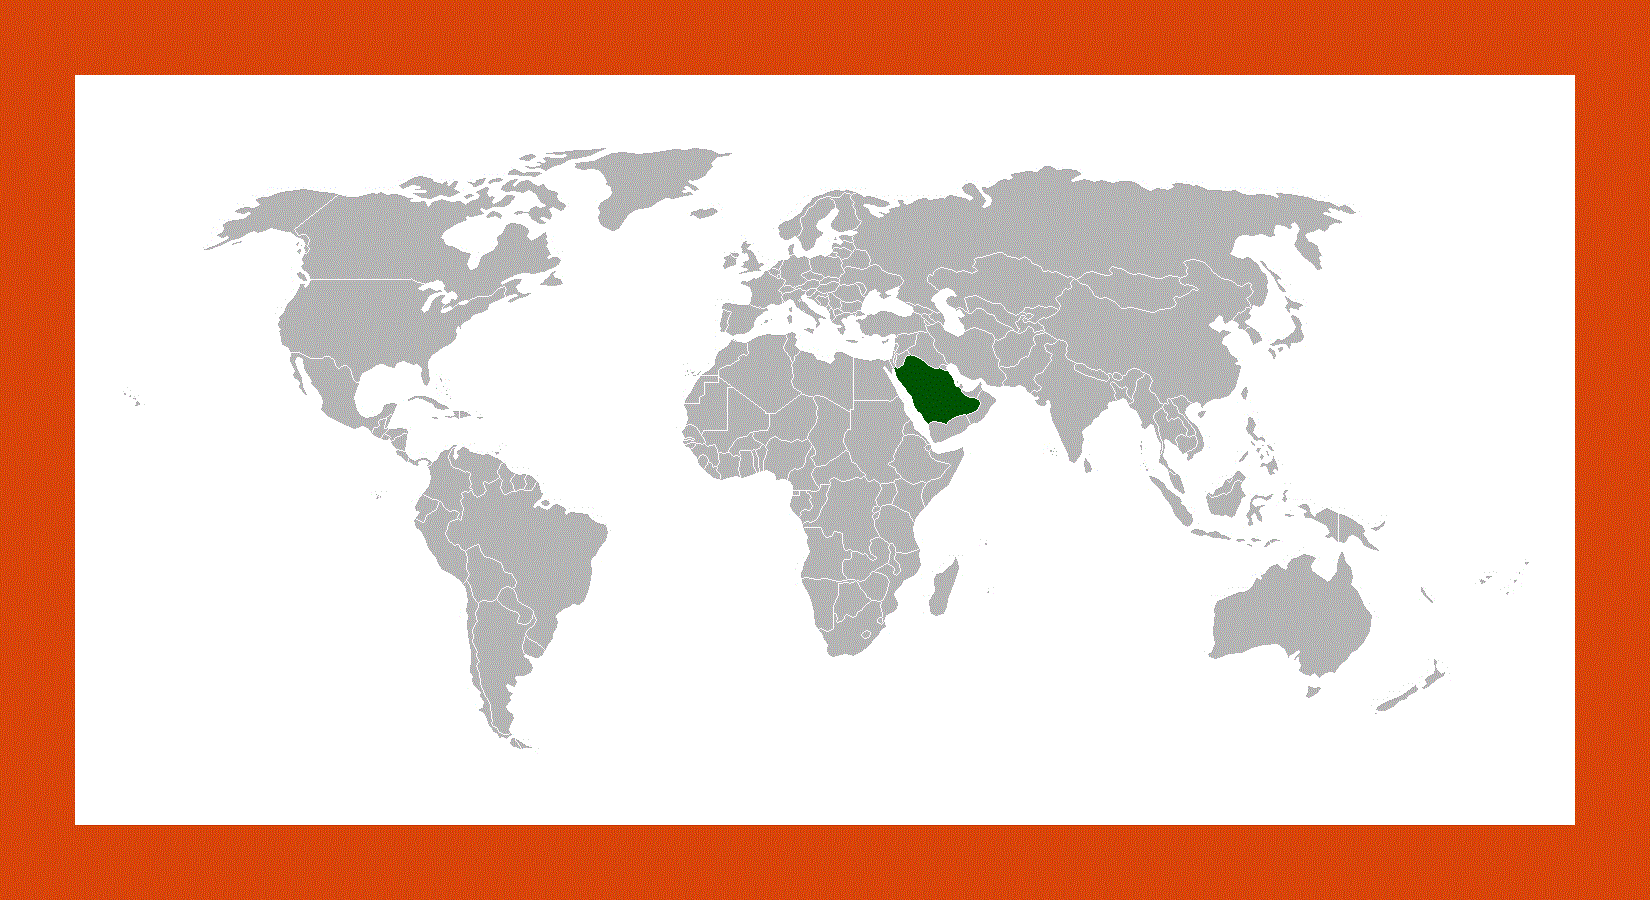 south arabia map